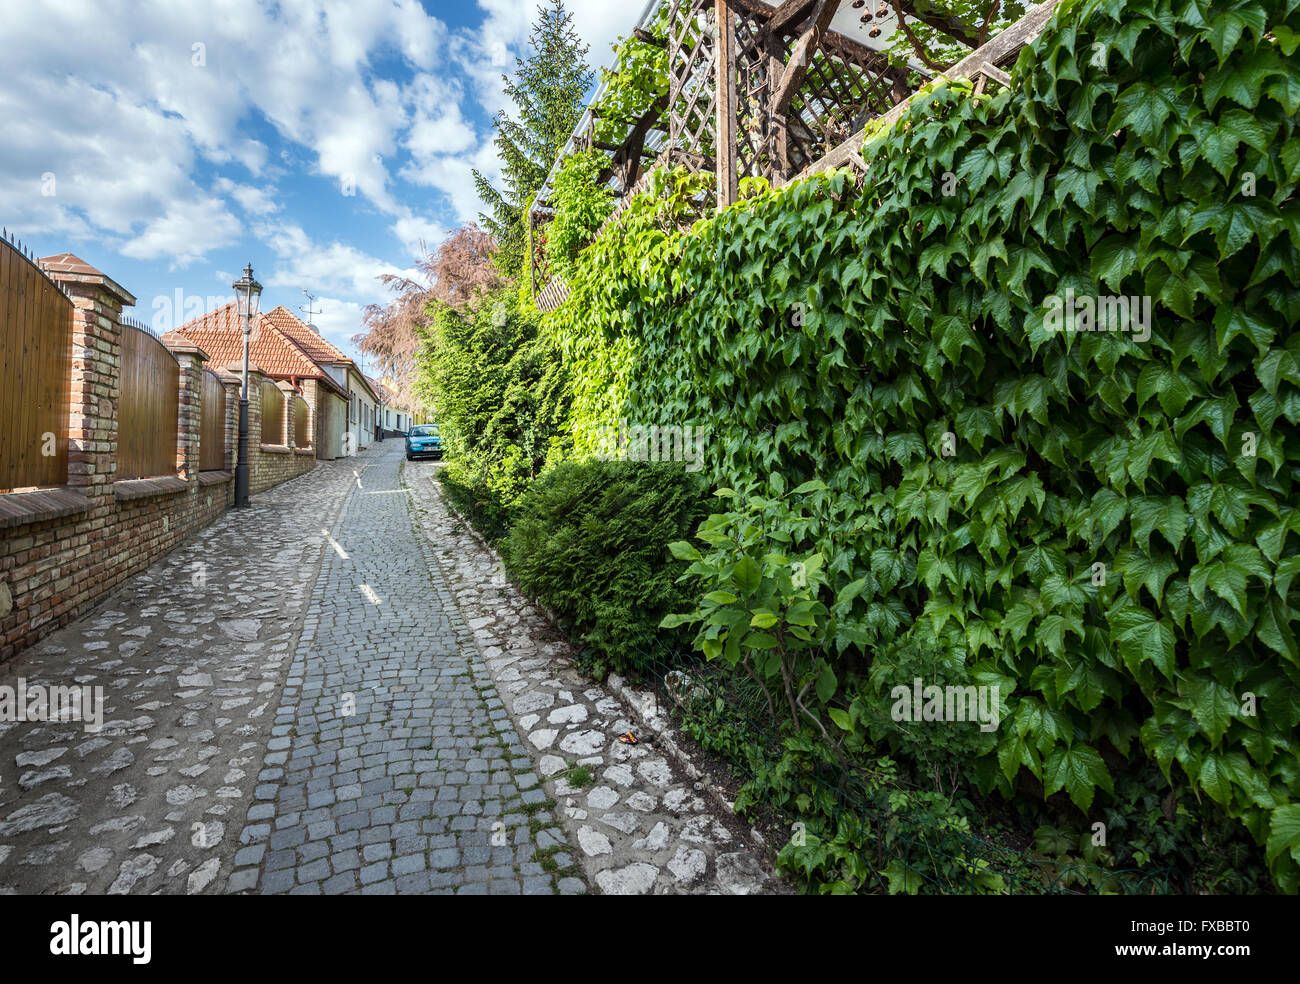 Small paved street - Kamenny radek in Mikulov town, Moravia region, Czech Republic Stock Photo